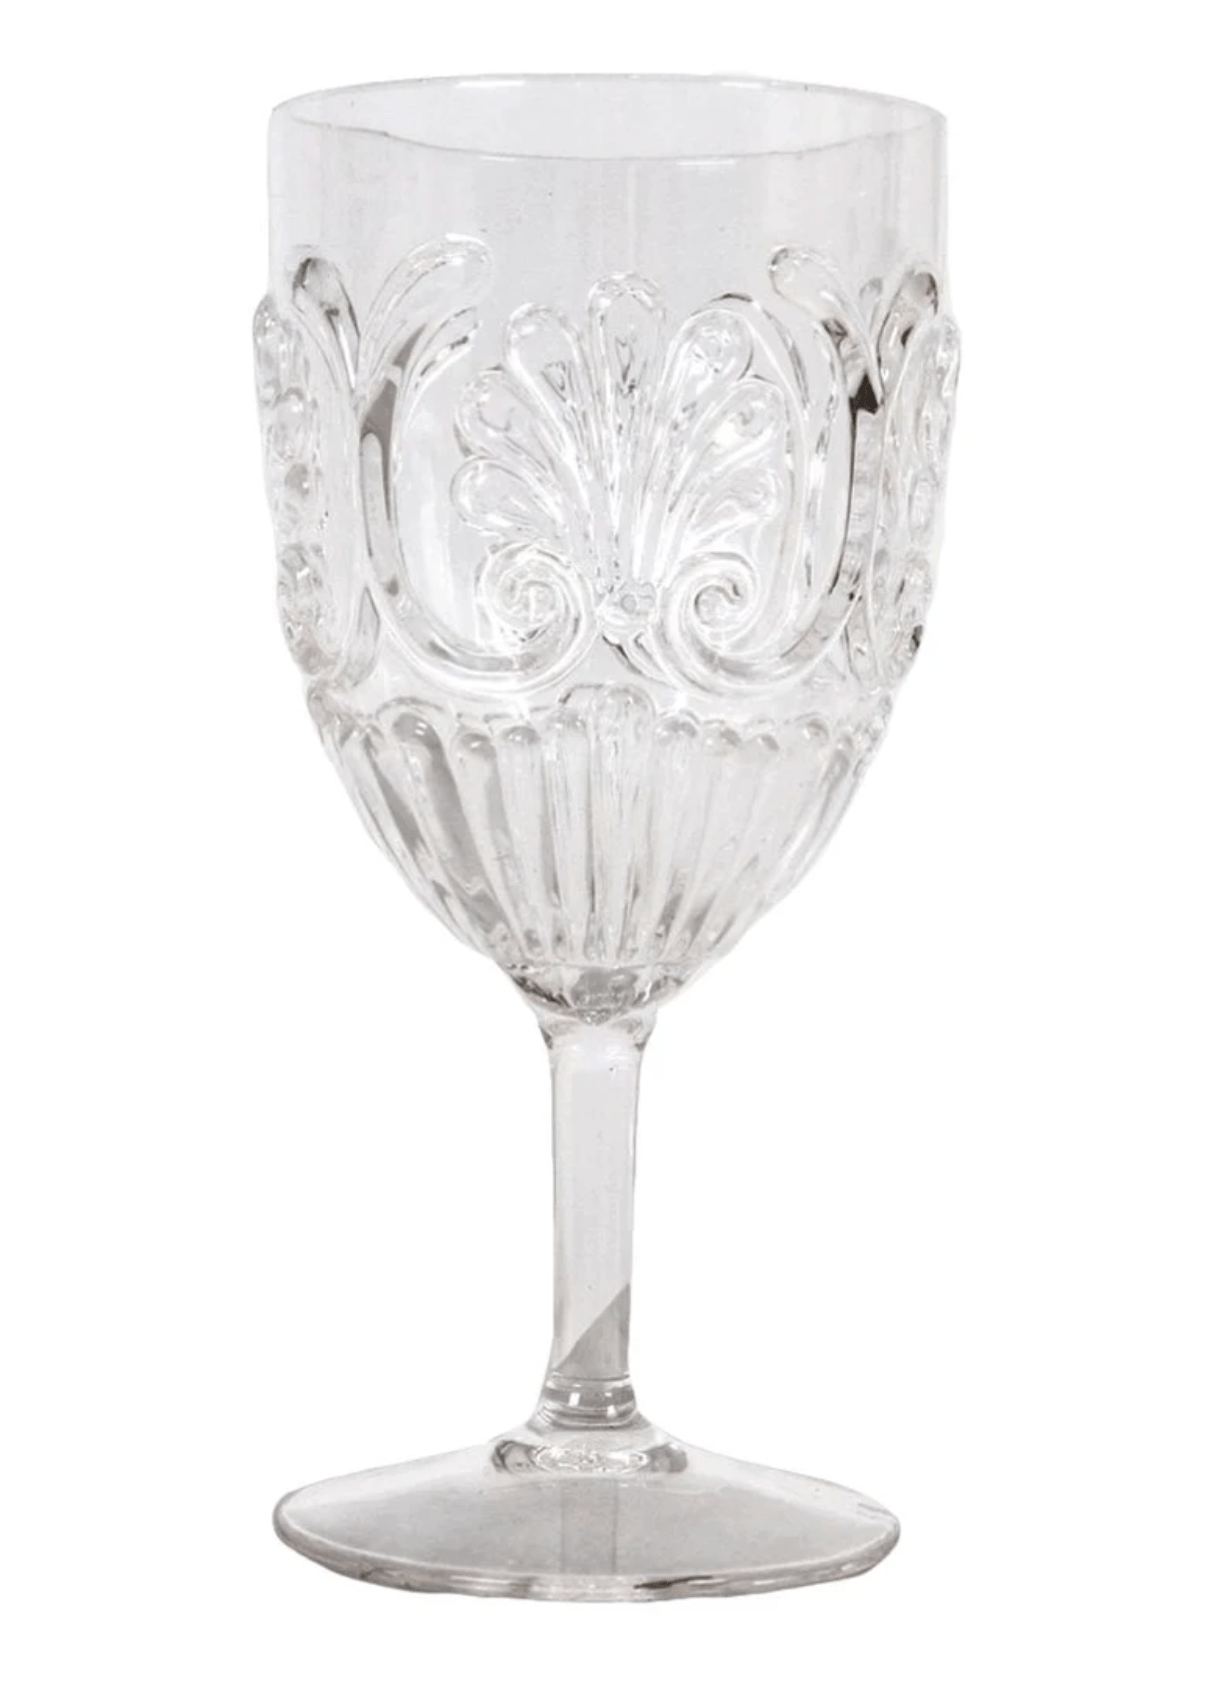 Flemington Acrylic Wine Glass - Clear House of Dudley